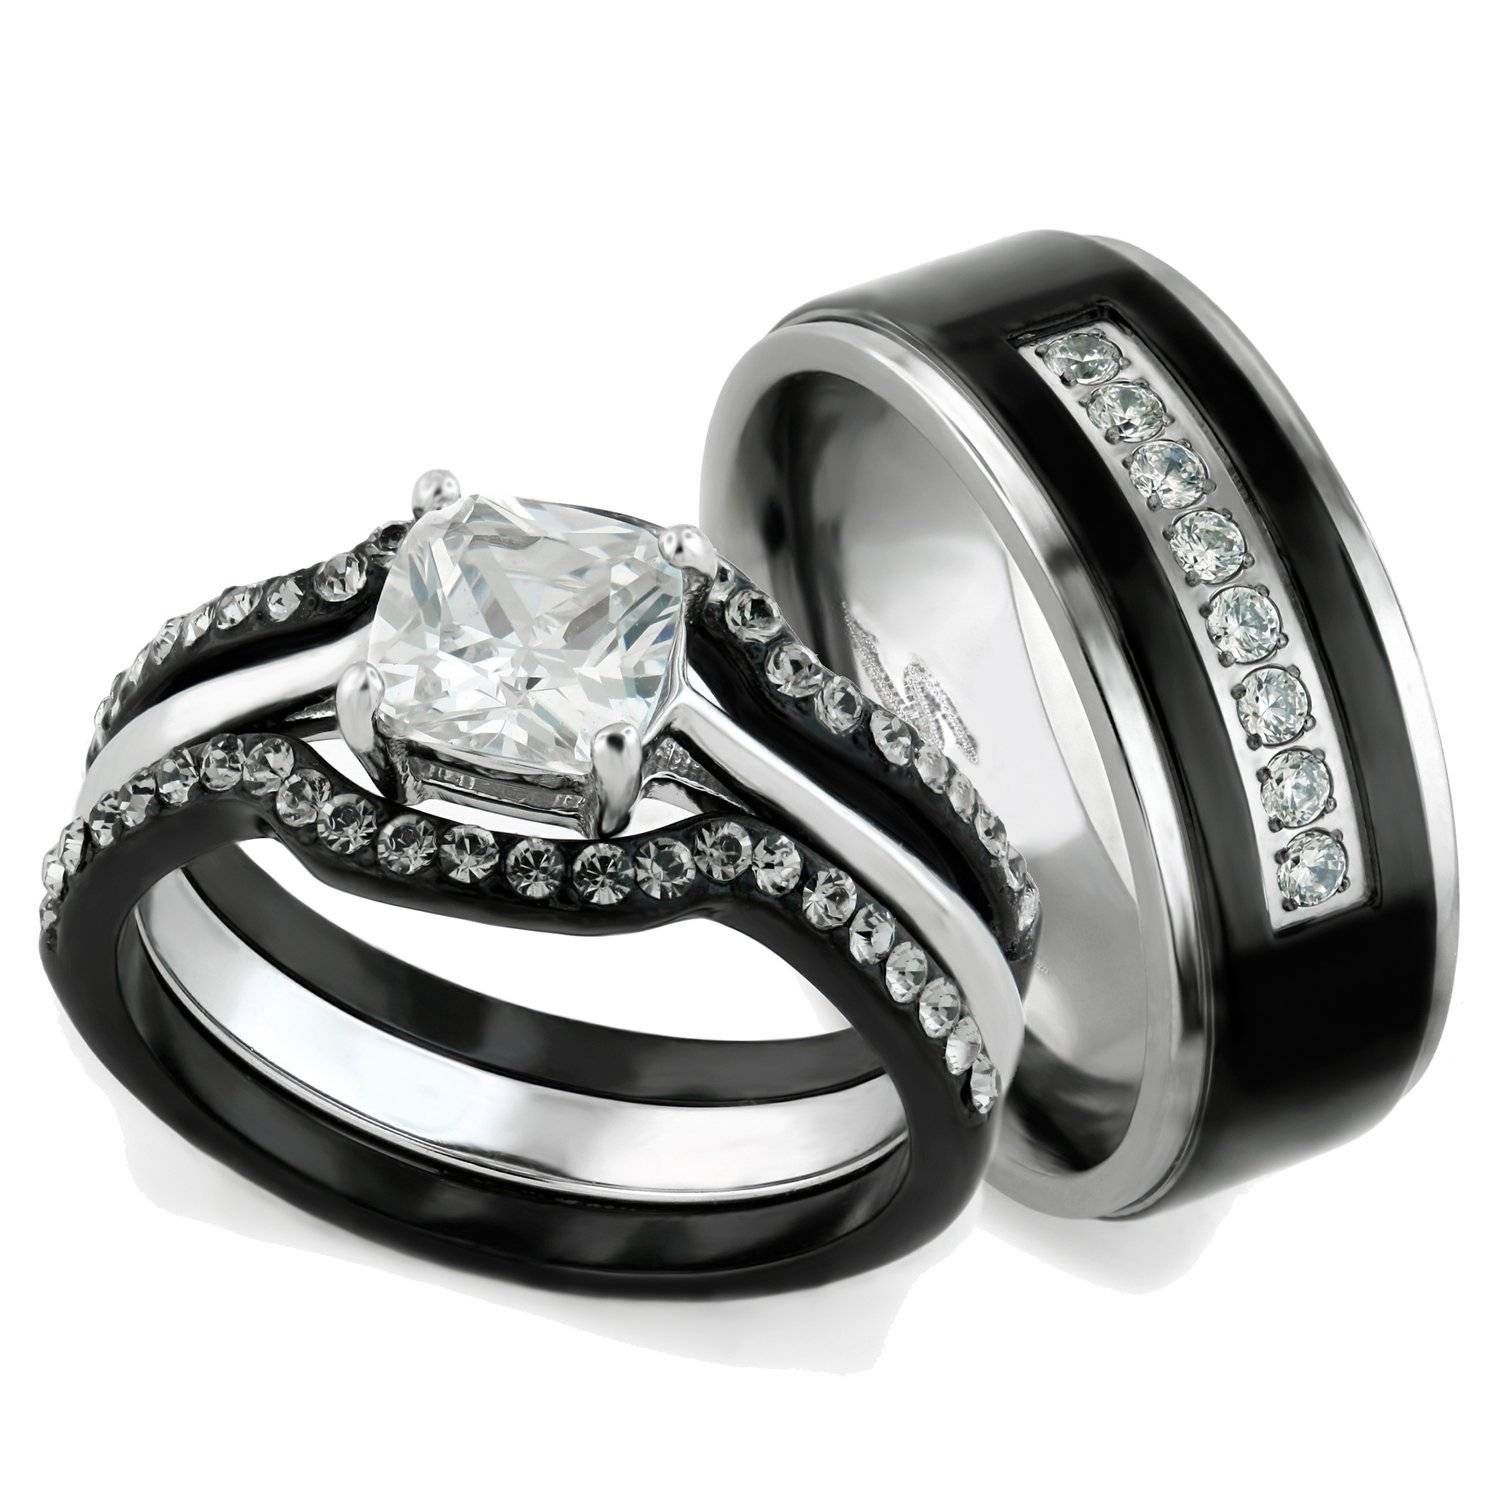 Walmart Jewelry Wedding Rings Entrancing Walmart Wedding Rings In Men's Wedding Bands At Walmart (View 1 of 15)